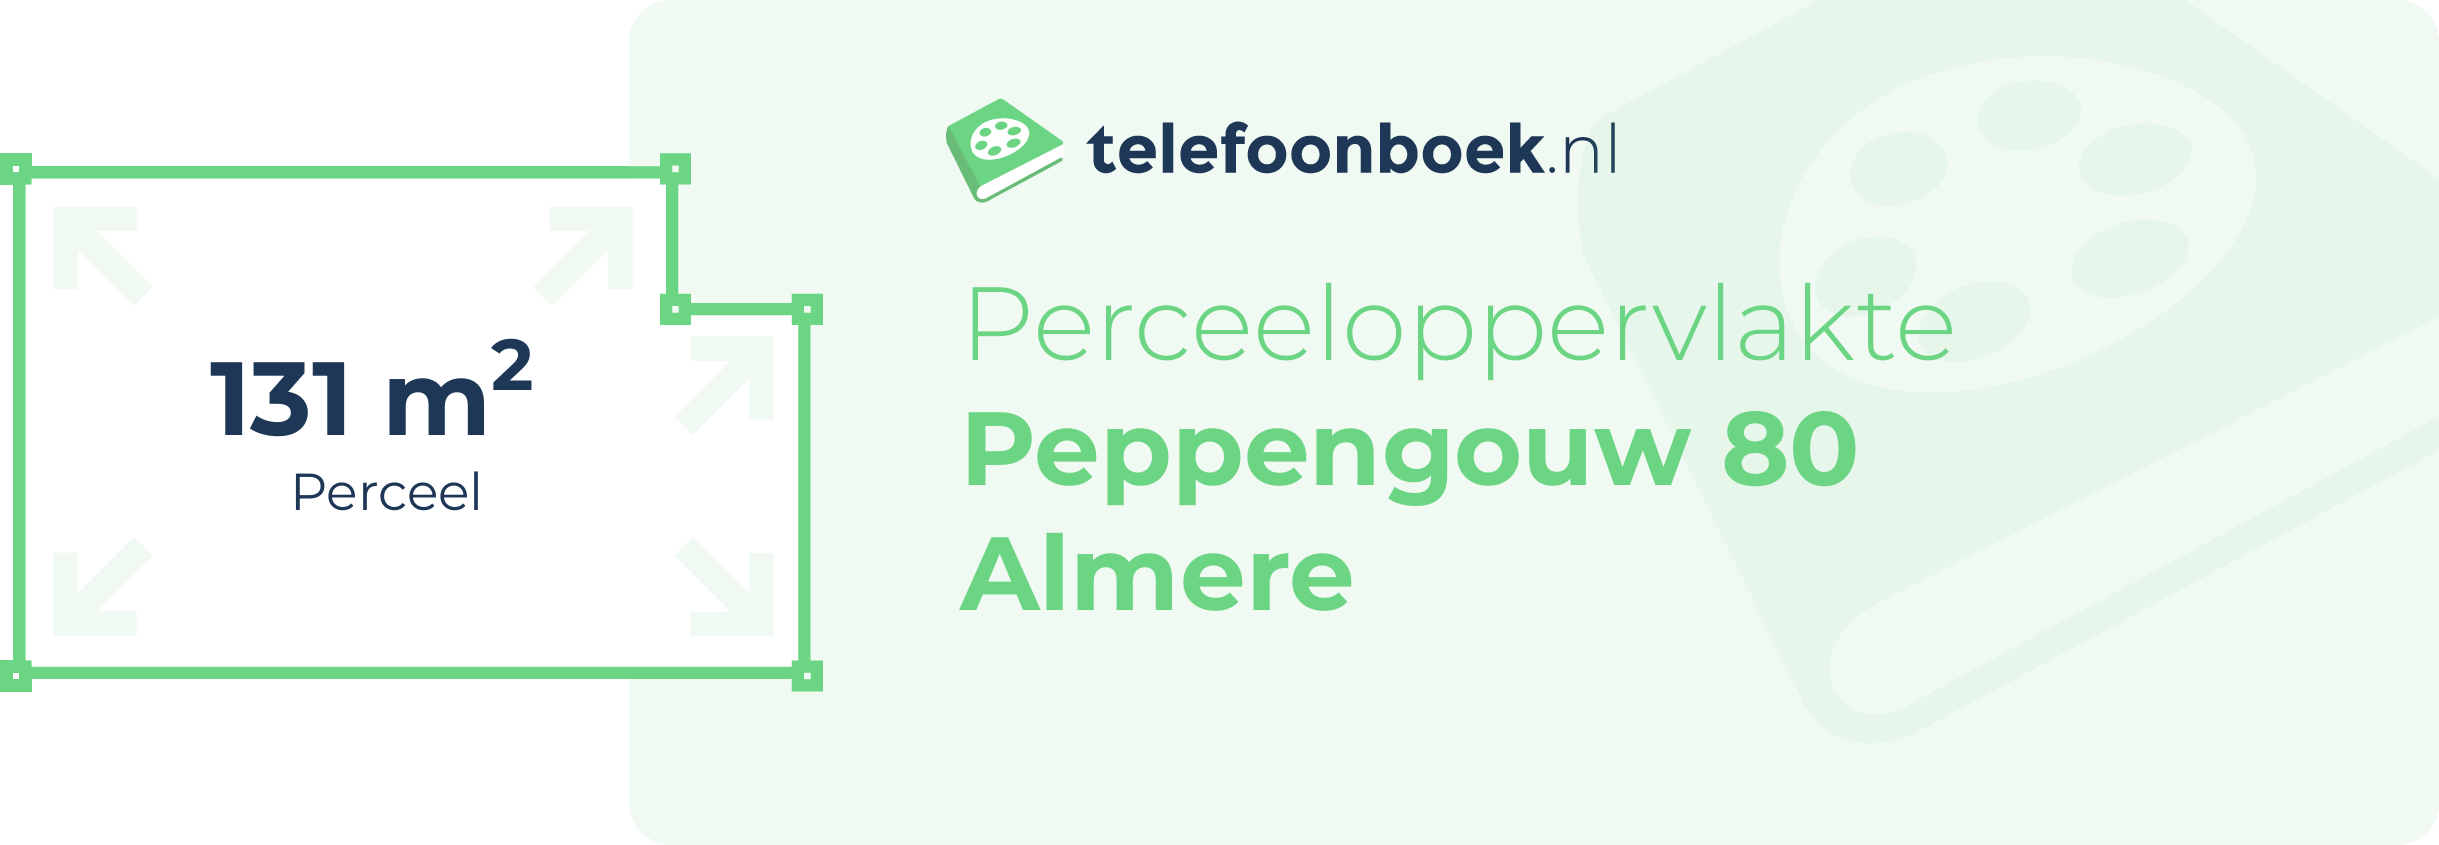 Perceeloppervlakte Peppengouw 80 Almere